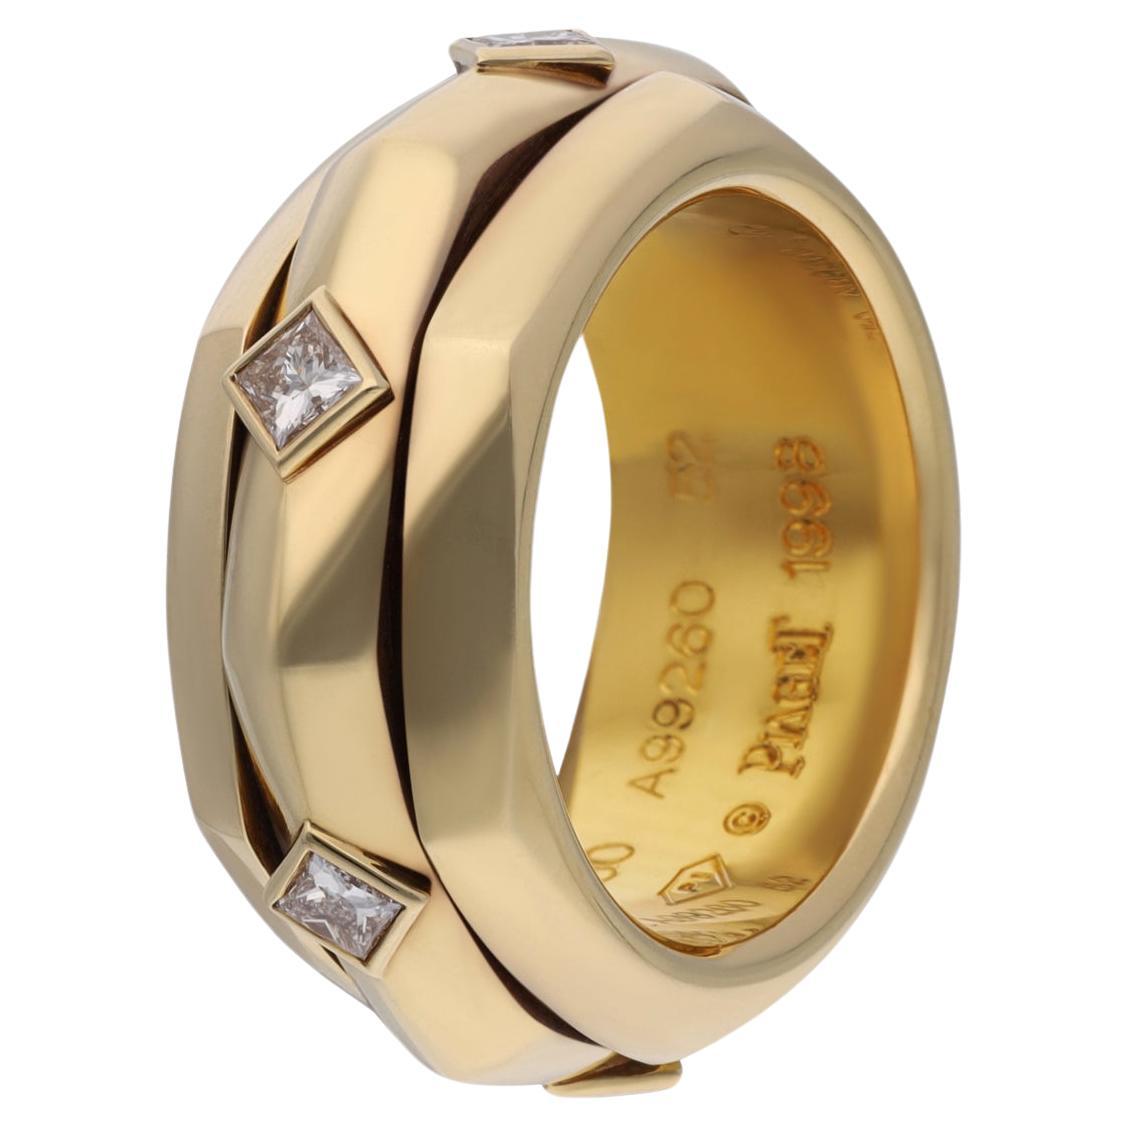 Piaget Ring „POSSESSION“ mit Diamantbesatz